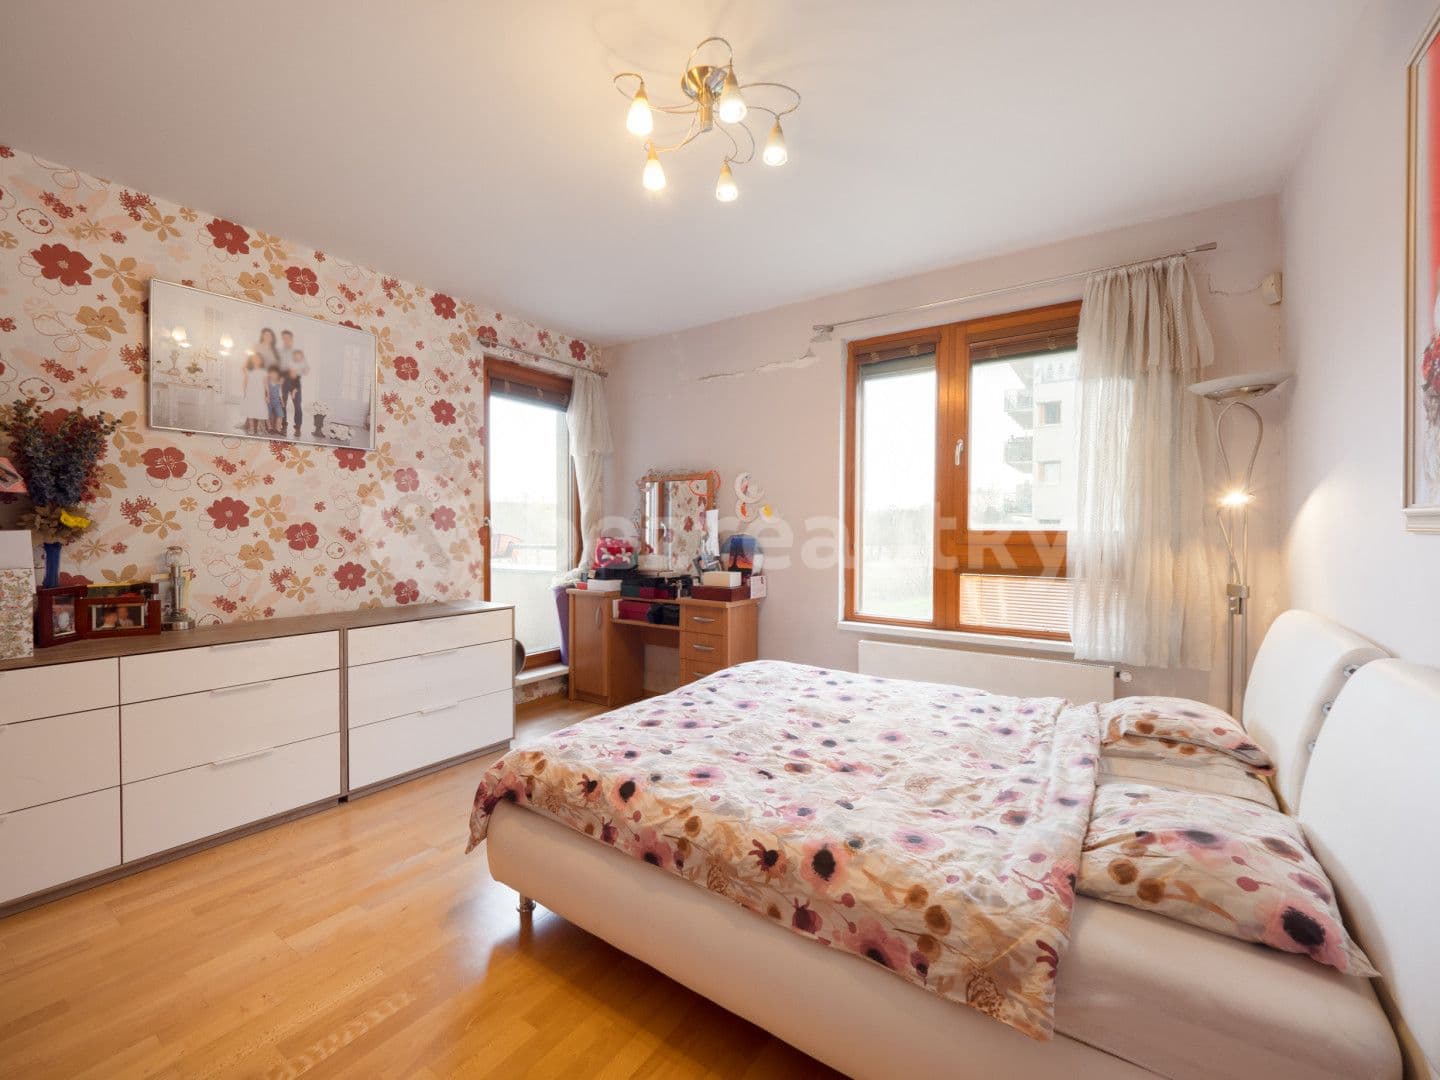 3 bedroom with open-plan kitchen flat for sale, 101 m², Mattioliho, Prague, Prague